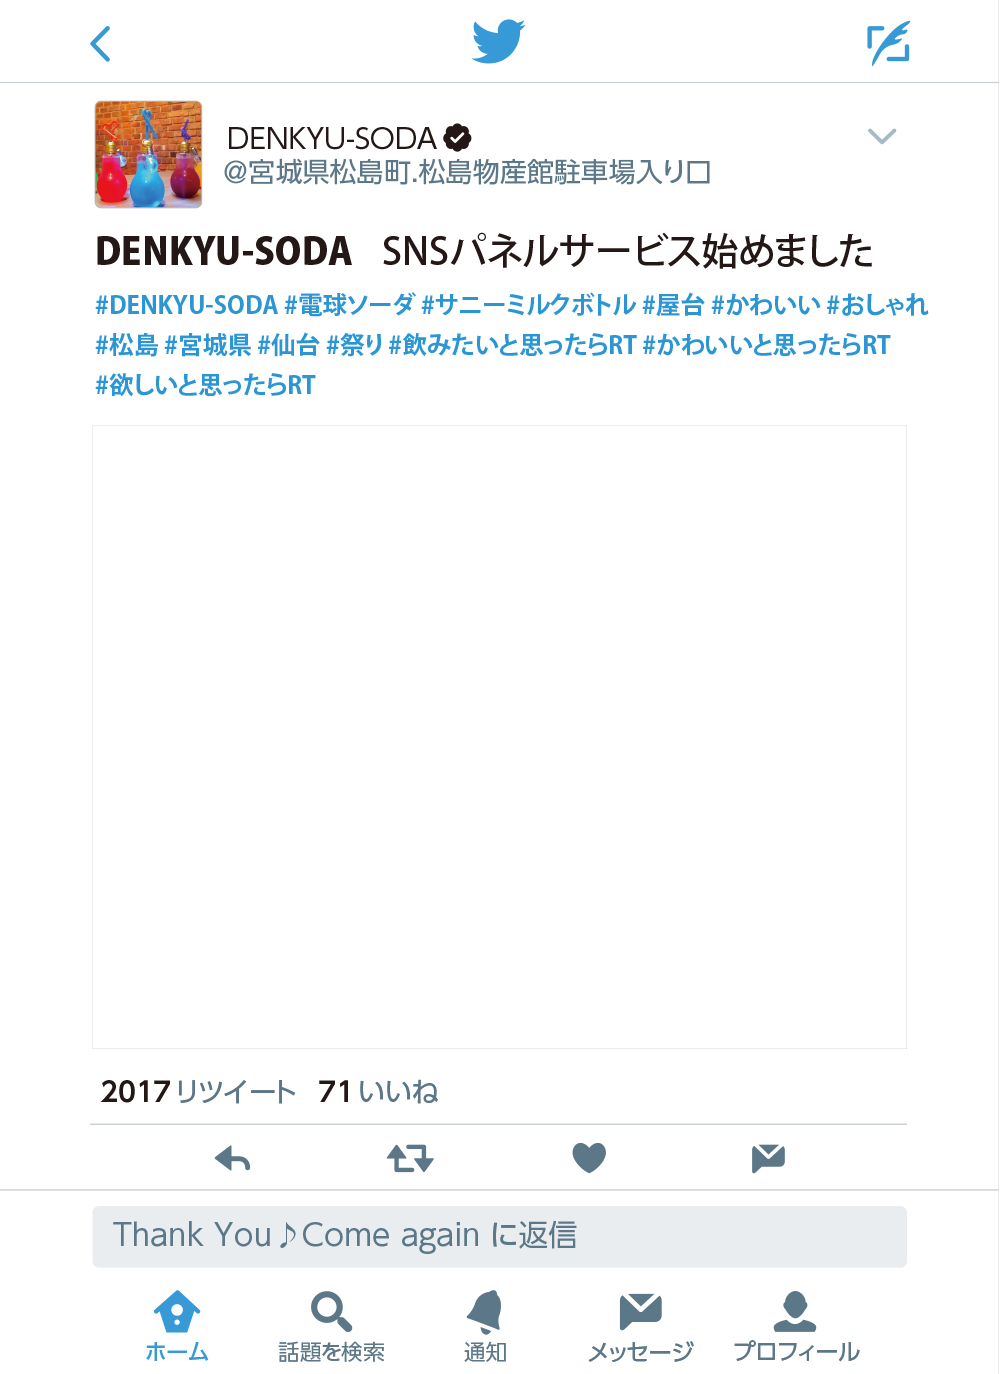 DENKYU-SODA SNSパネル